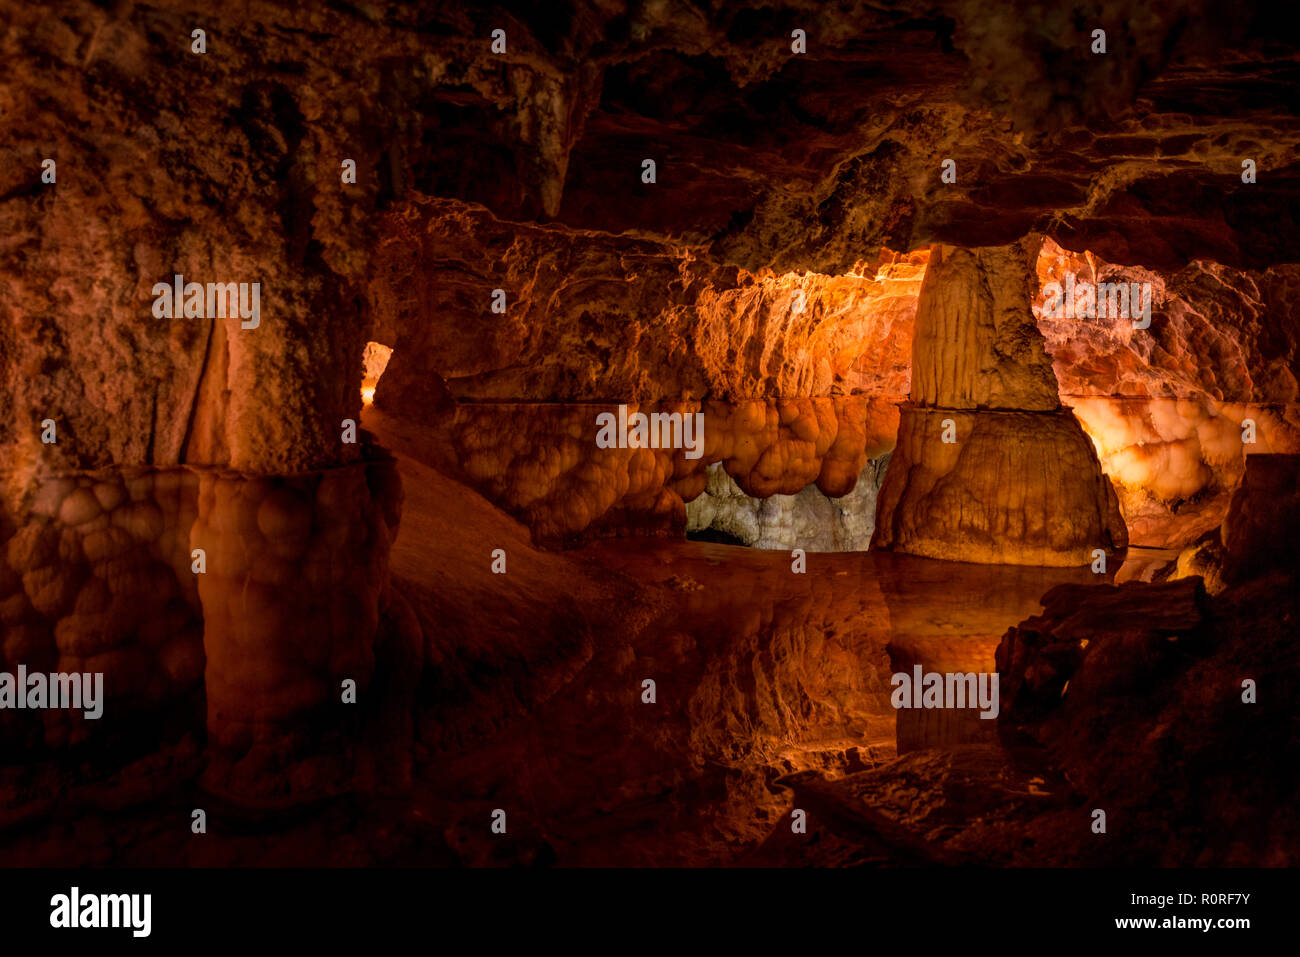 Gruta de las Maravillas, stalactites and stalagmites in a stalactite cave, Aracena, Huelva, Andalusia, Spain Stock Photo